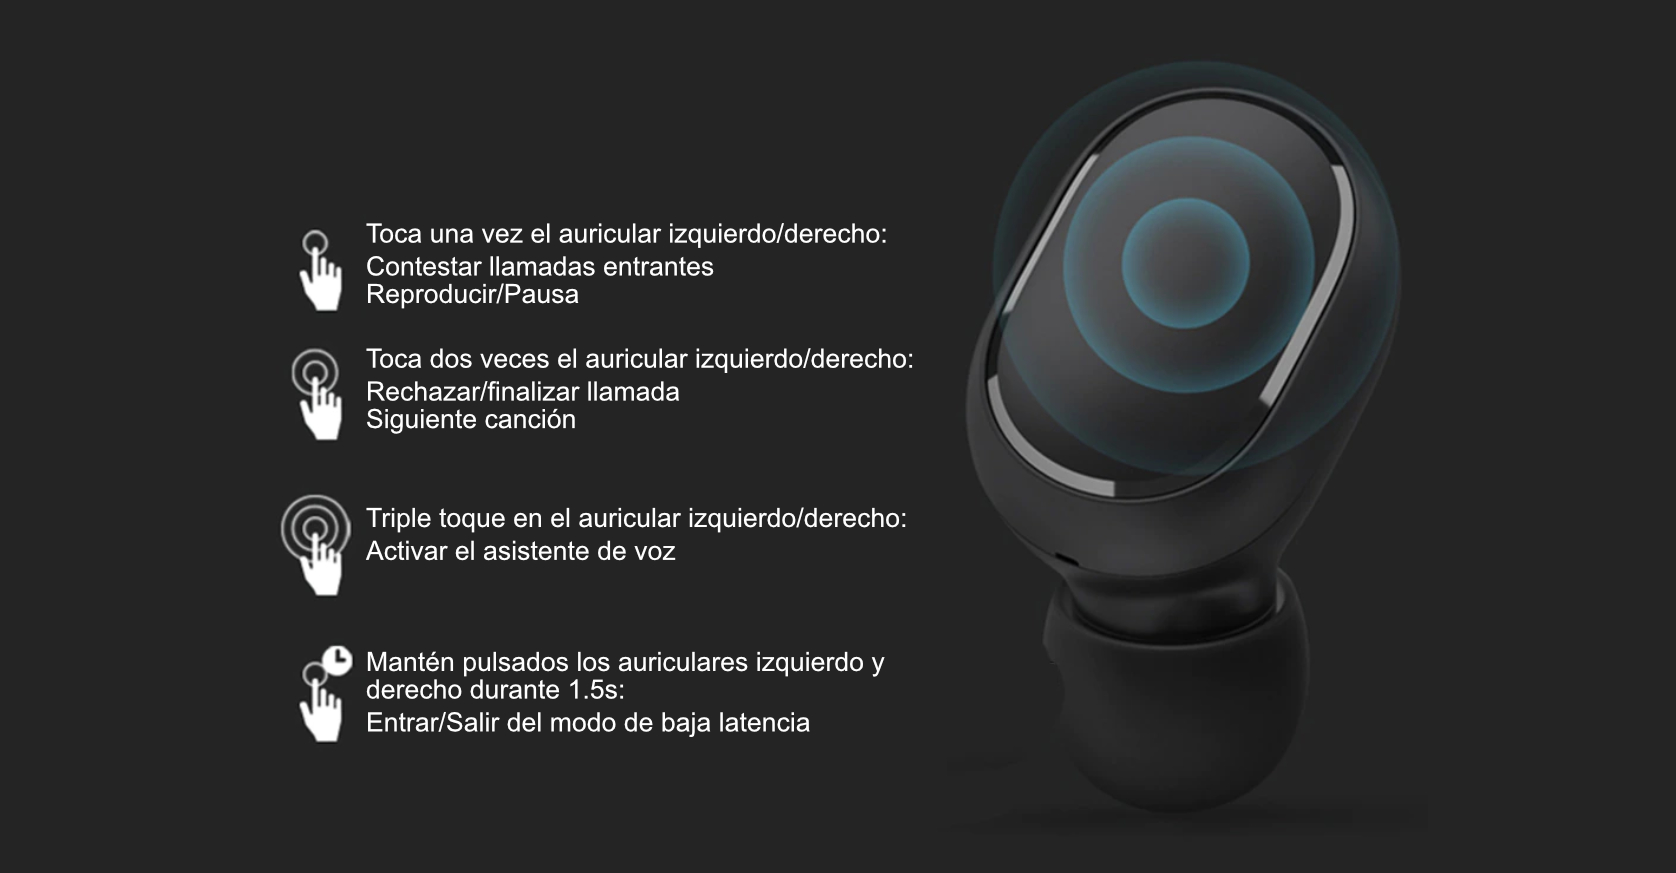 Xioami Redmi Buds Essential Ipx4 Waterproof Bluetooth 5 2 Hd Sound (2)